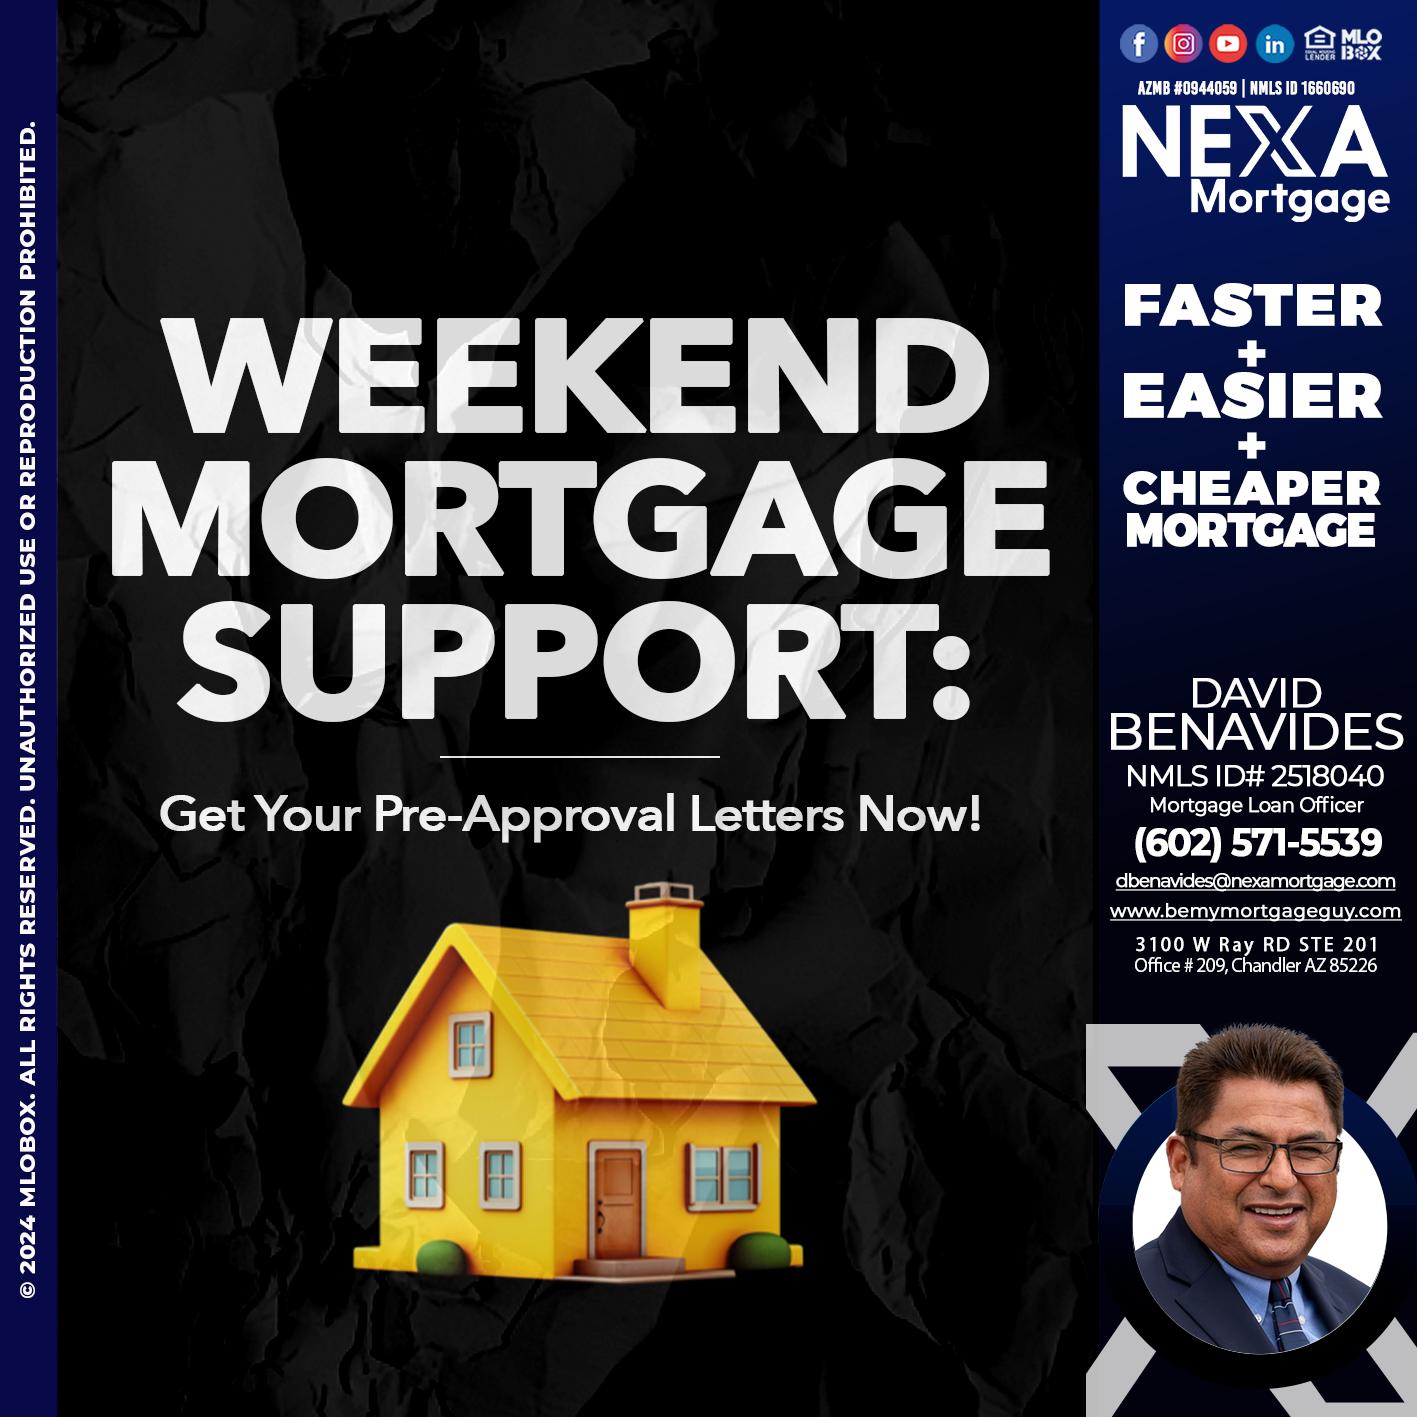 weekend - David Benavides -Mortgage Loan Officer